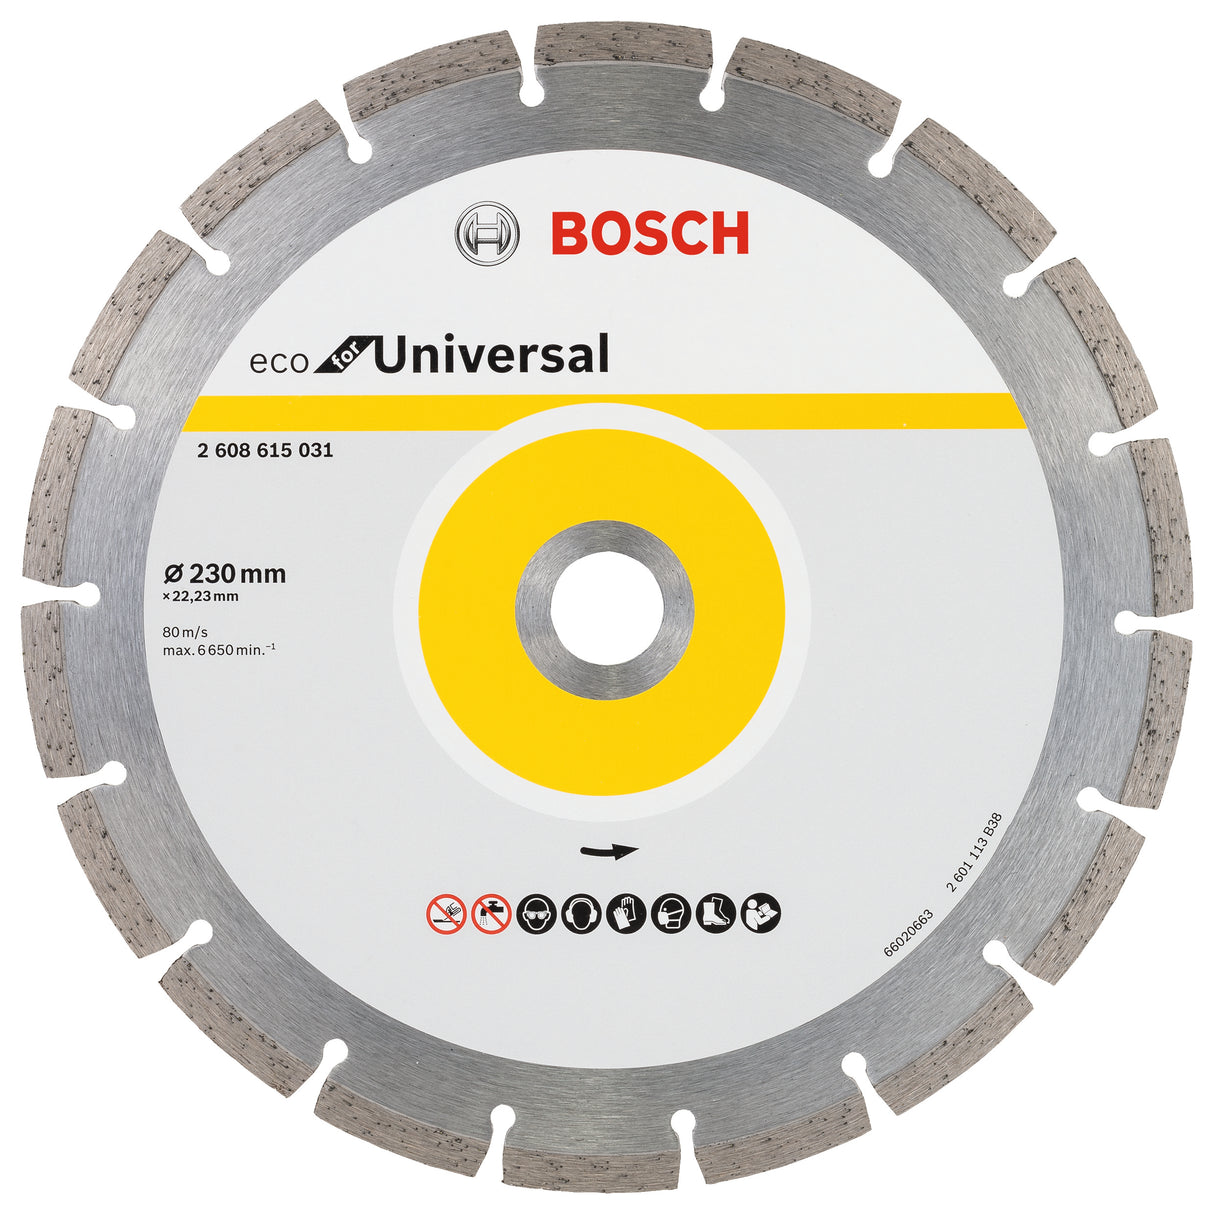 Bosch Professional Diamond Cutting Disc ECO - Universal, 230x22.23x2.6x7